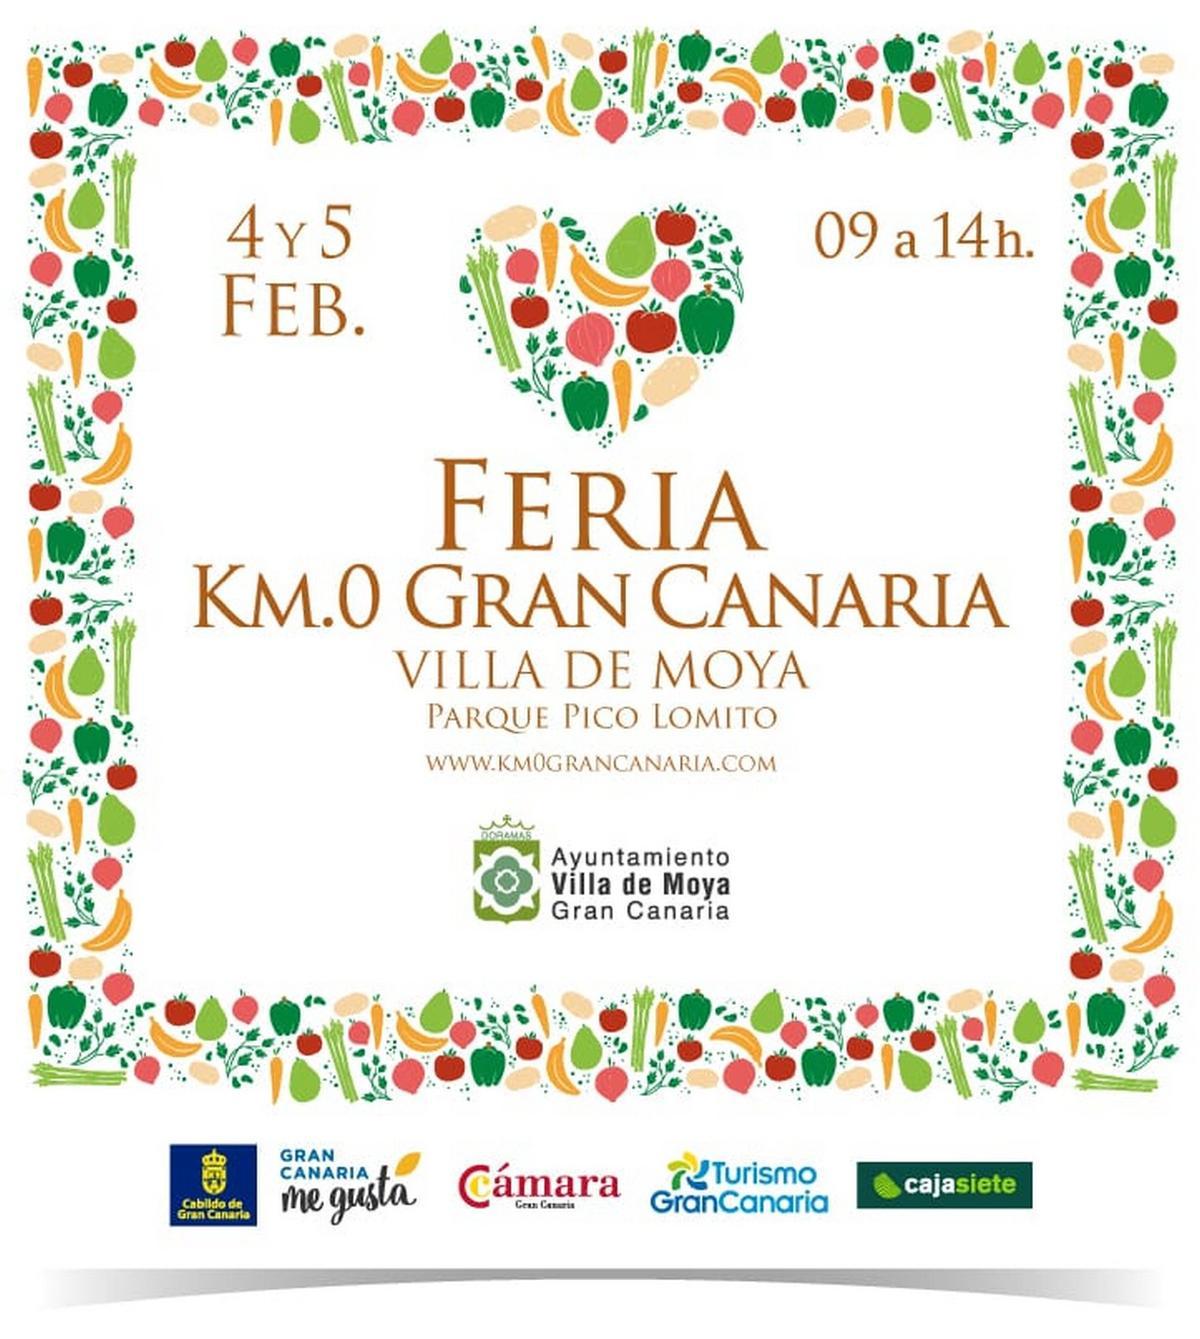 Cartel de la Feria Km.0 Gran Canaria.